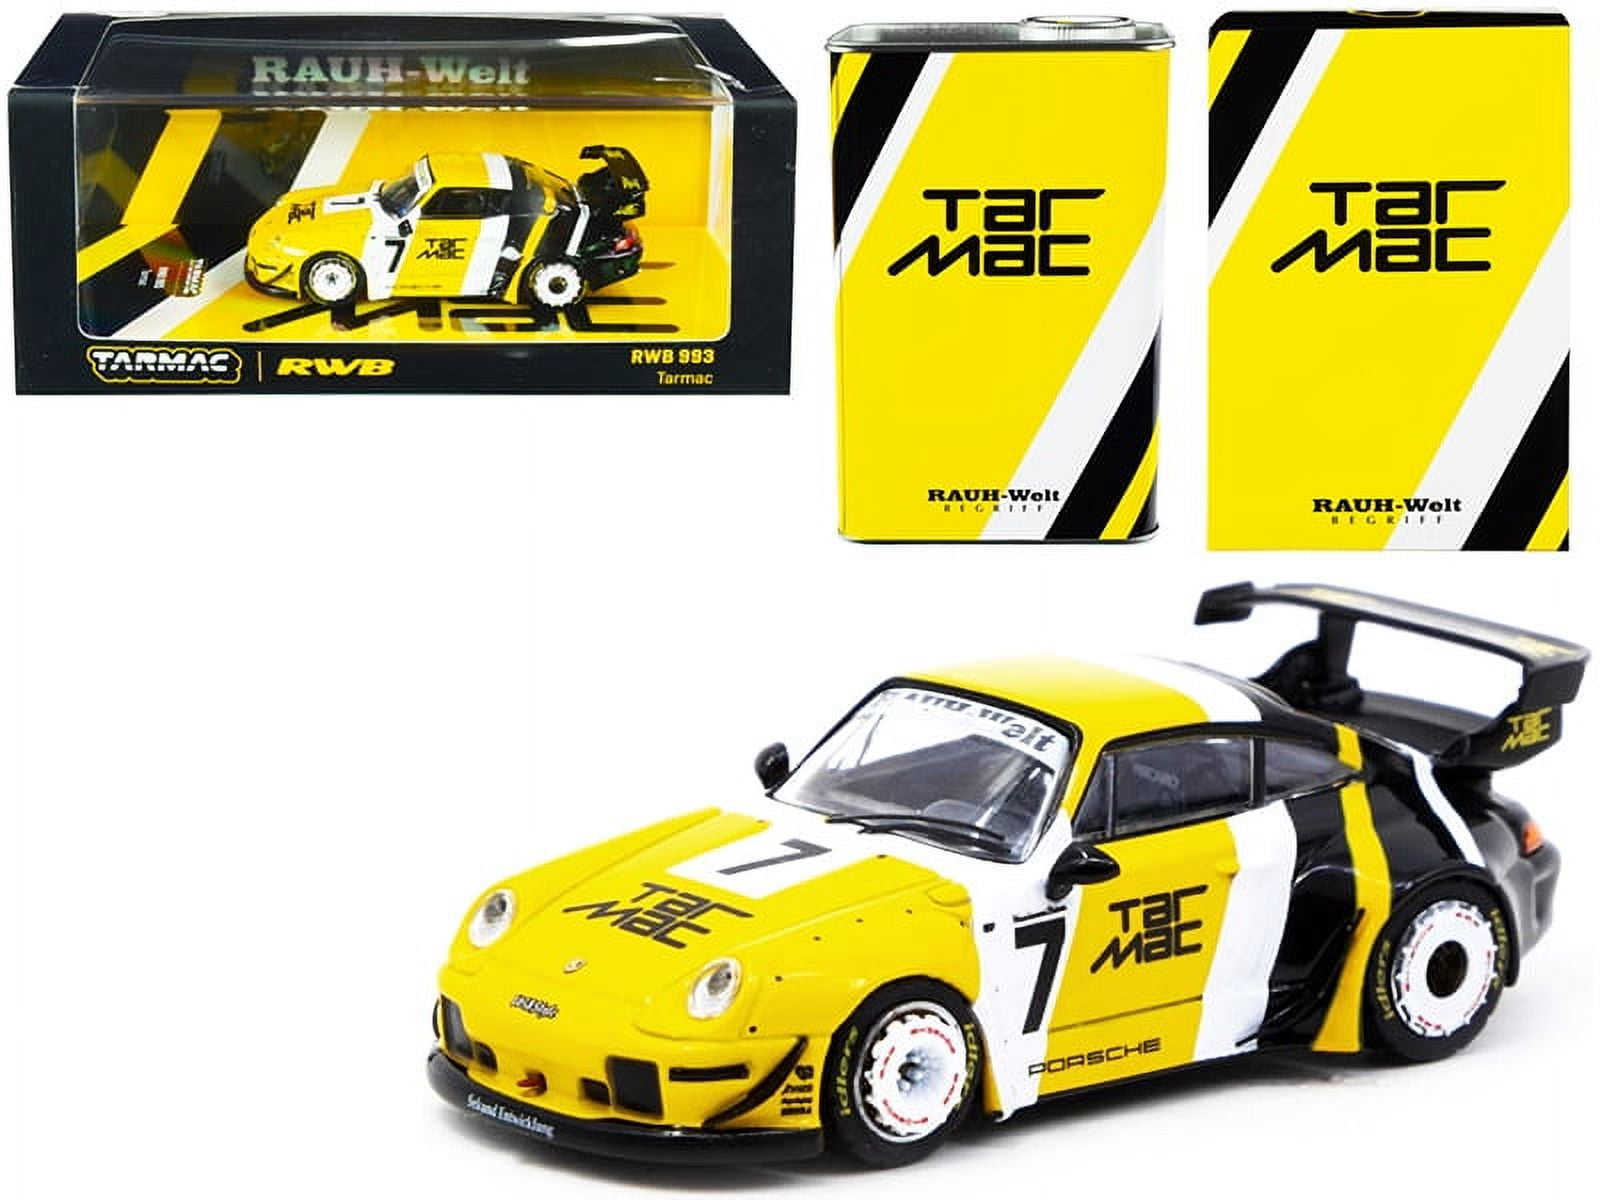 Porsche RWB 993 #7 Tarmac Yellow and Black with METAL OIL CAN